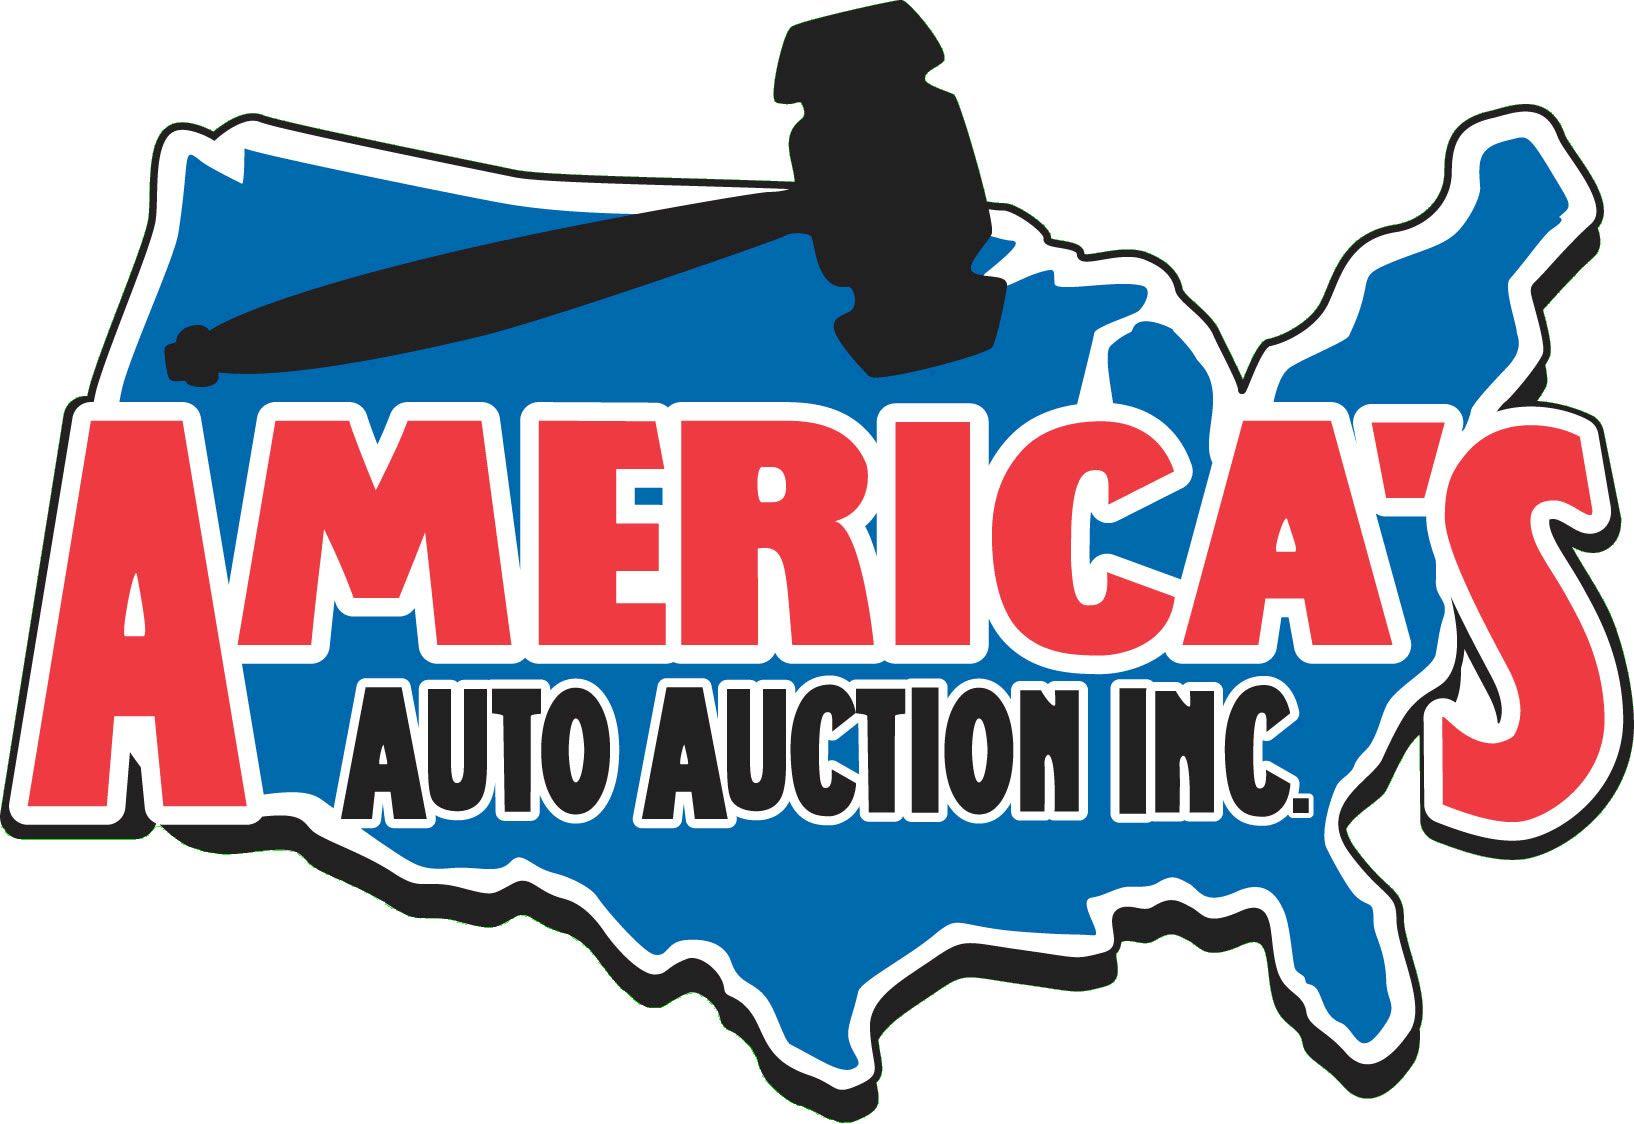 American Automobile Car Logo - Case Studies